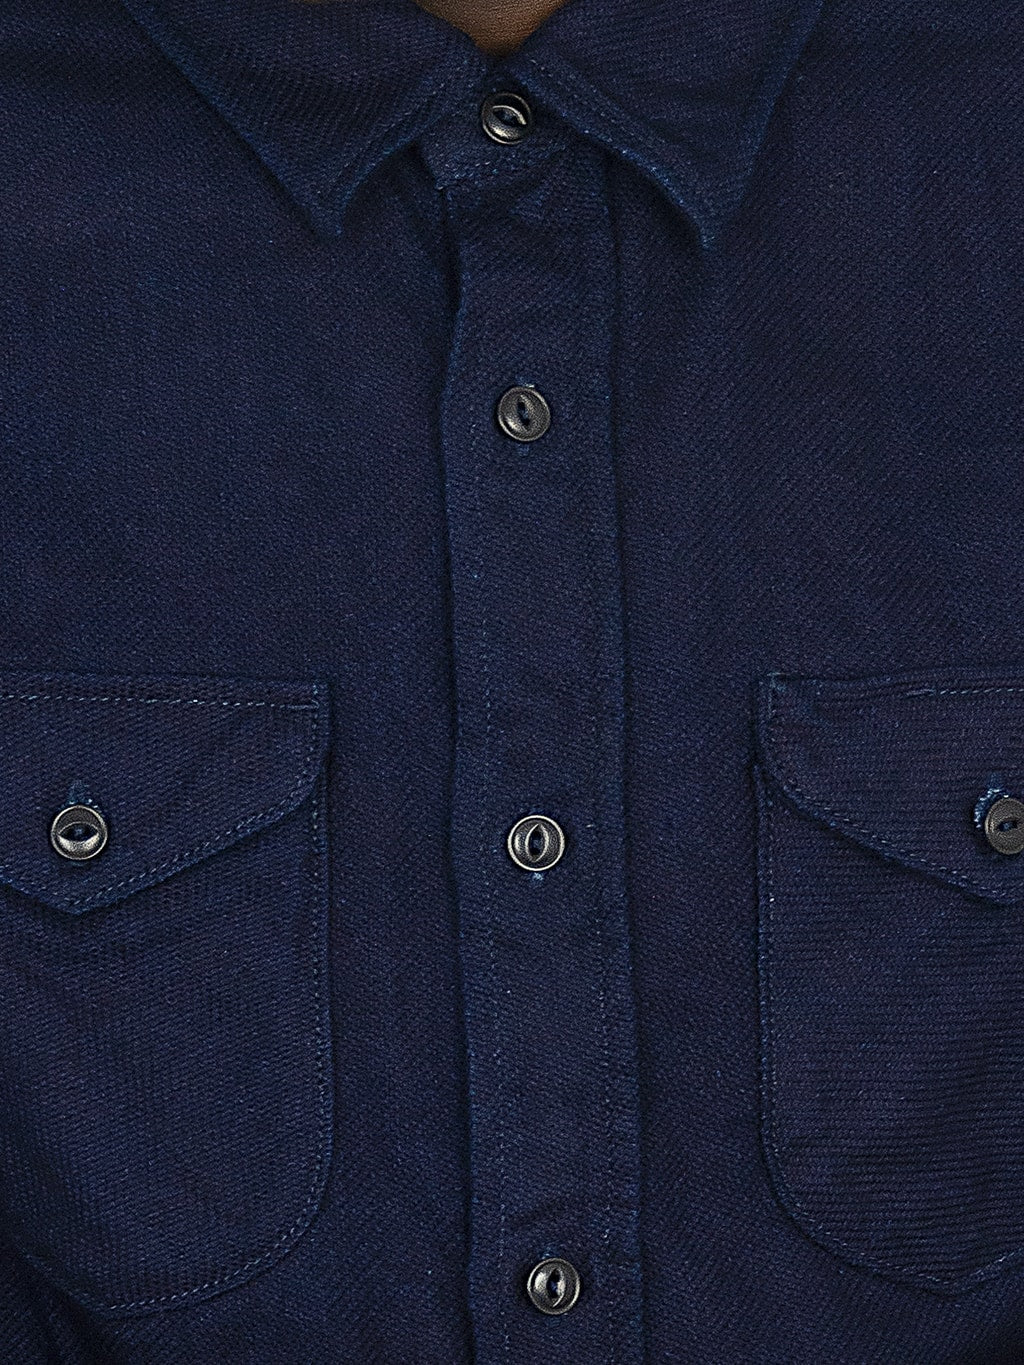 UES Indigo Heavy Selvedge Flannel Shirt chest details